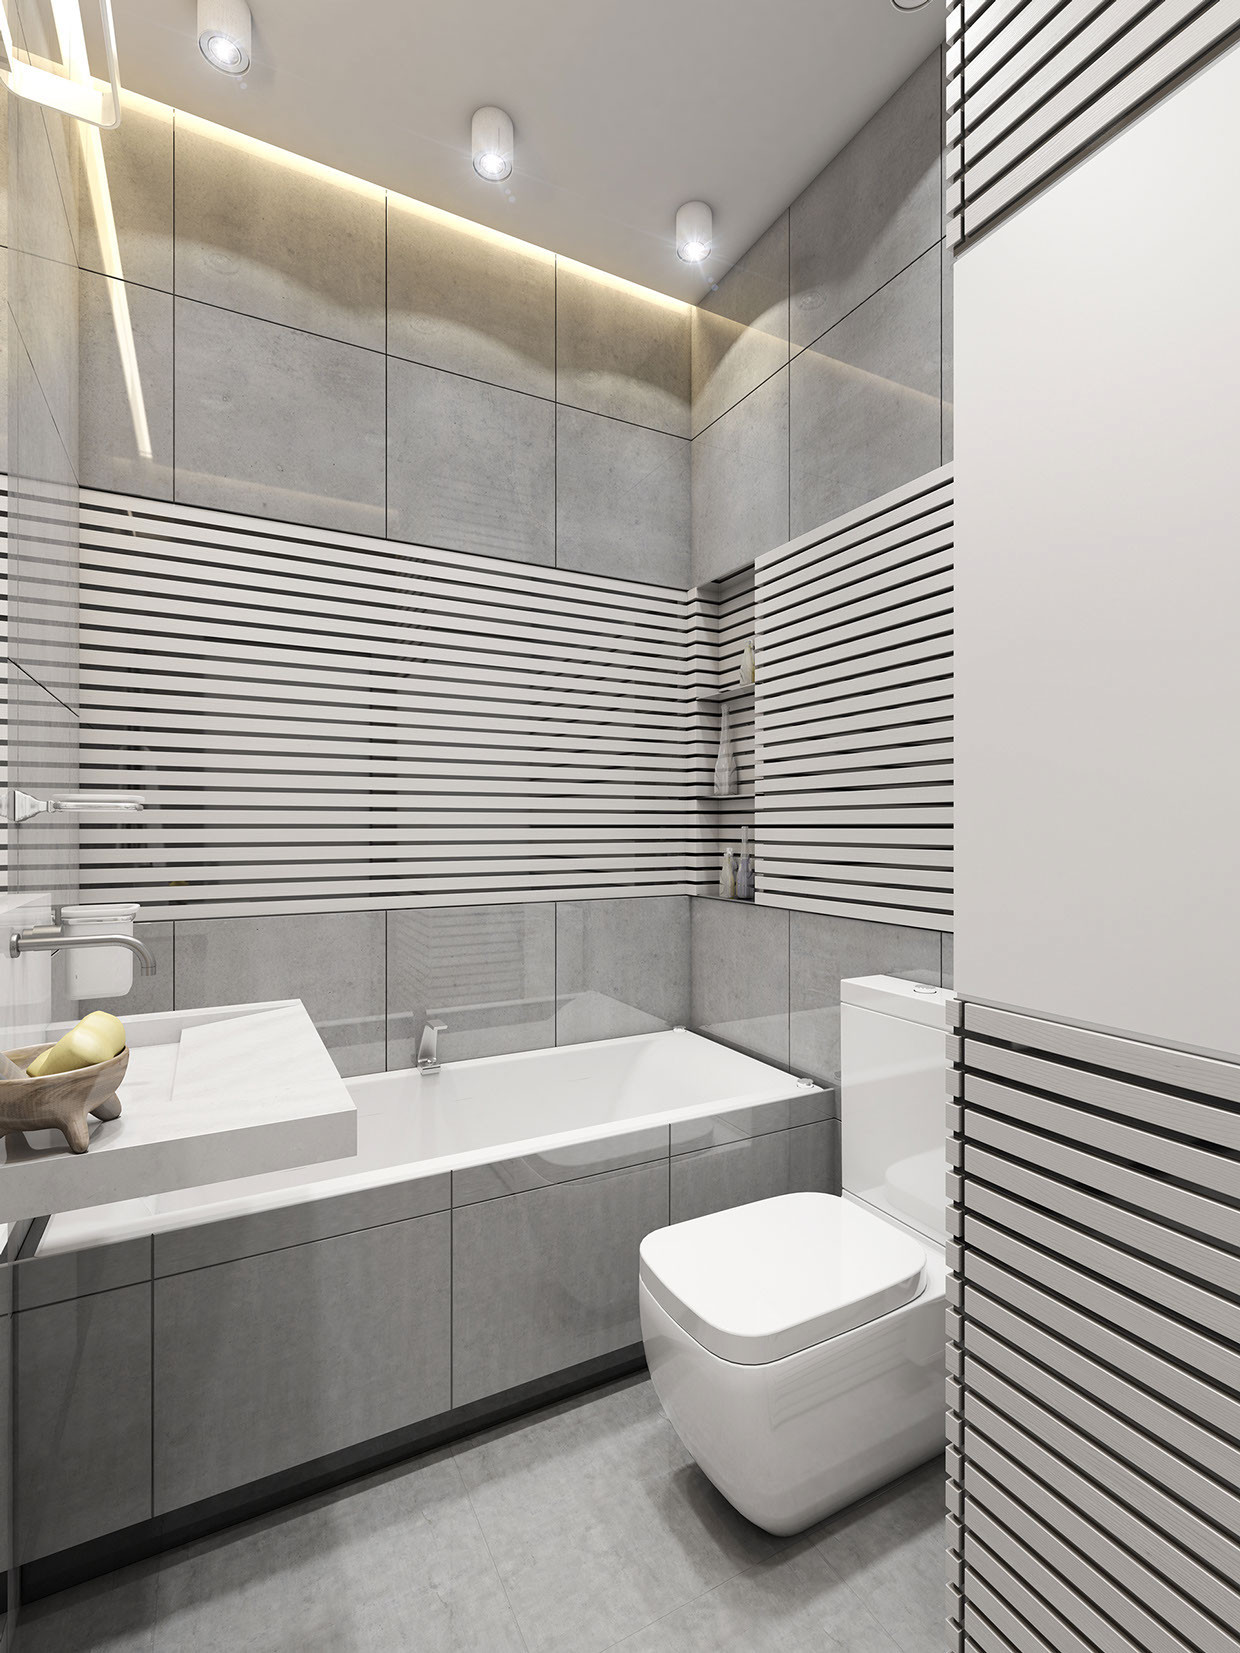 Bathroom Design Ideas Small
 A Suitable Simple Small Bathroom Designs Looks So Perfect